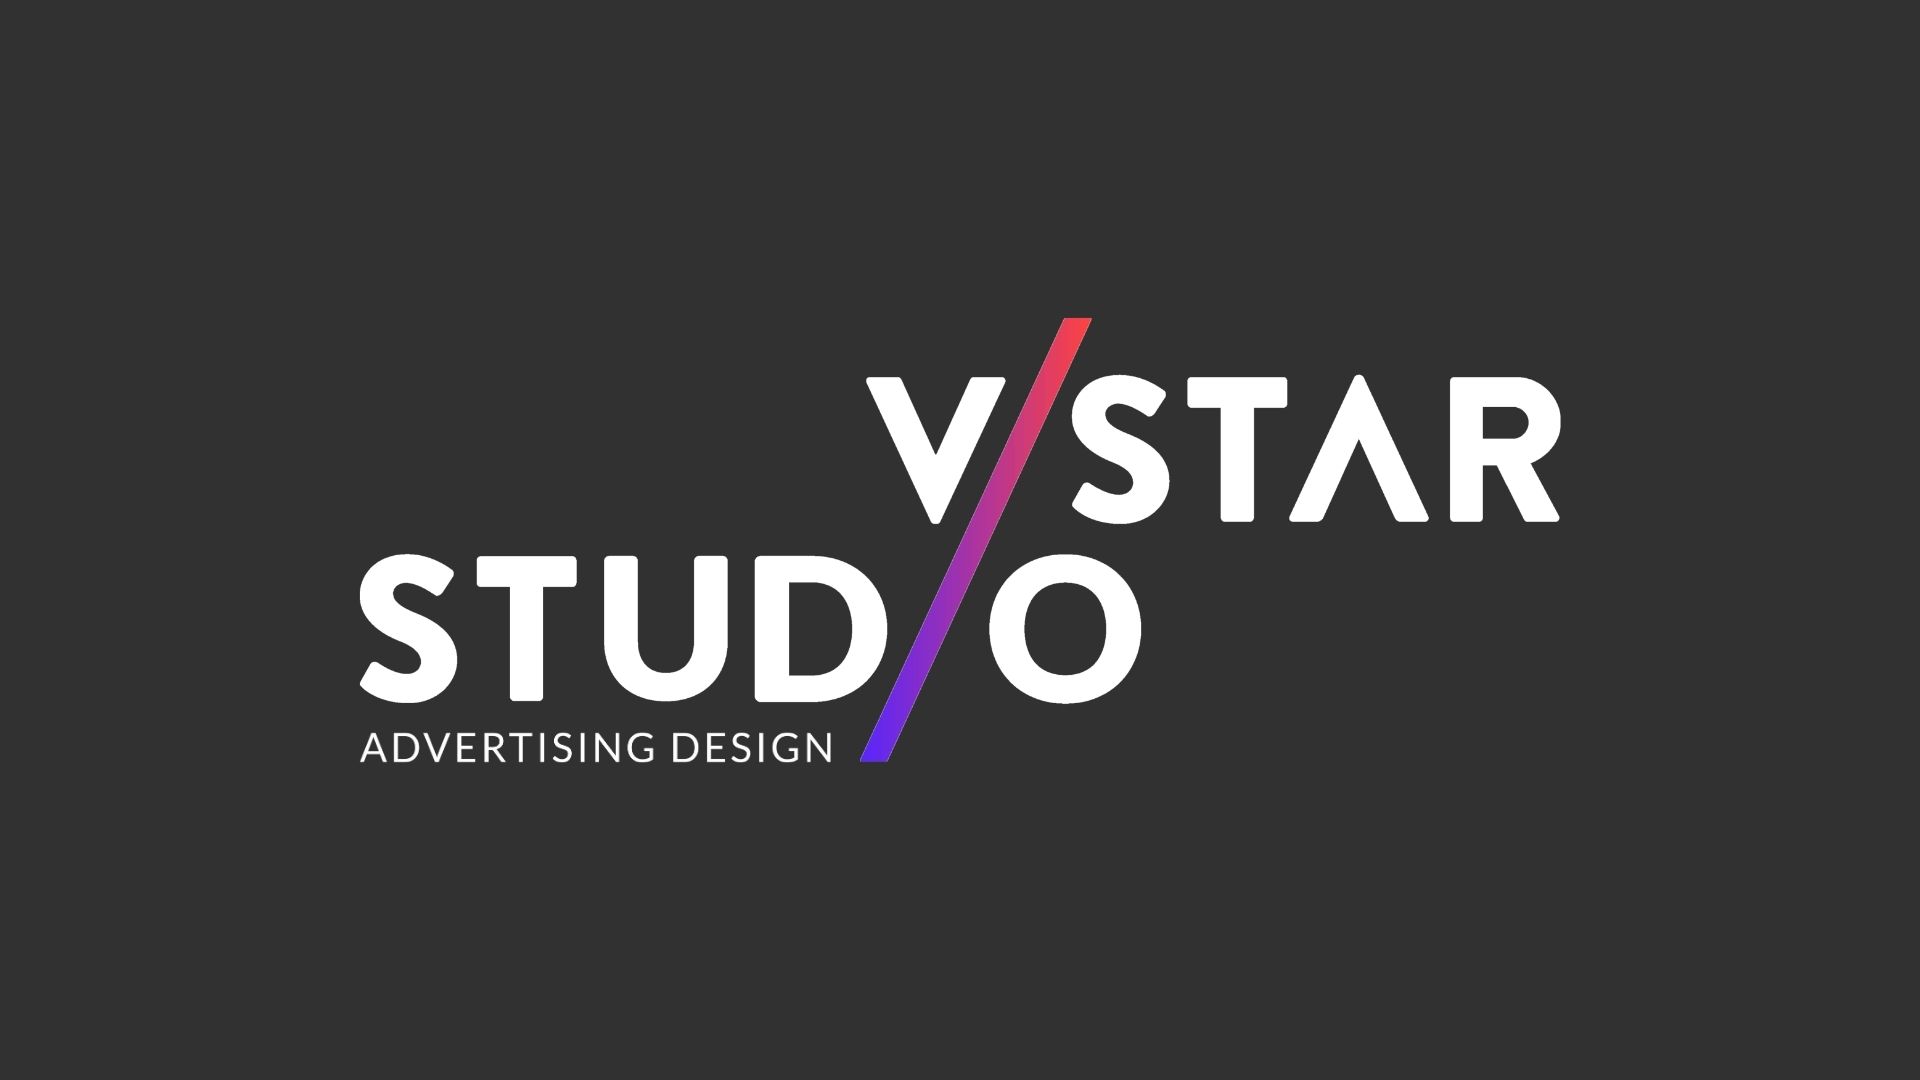 Vistar Studio advertising design for DOOH 